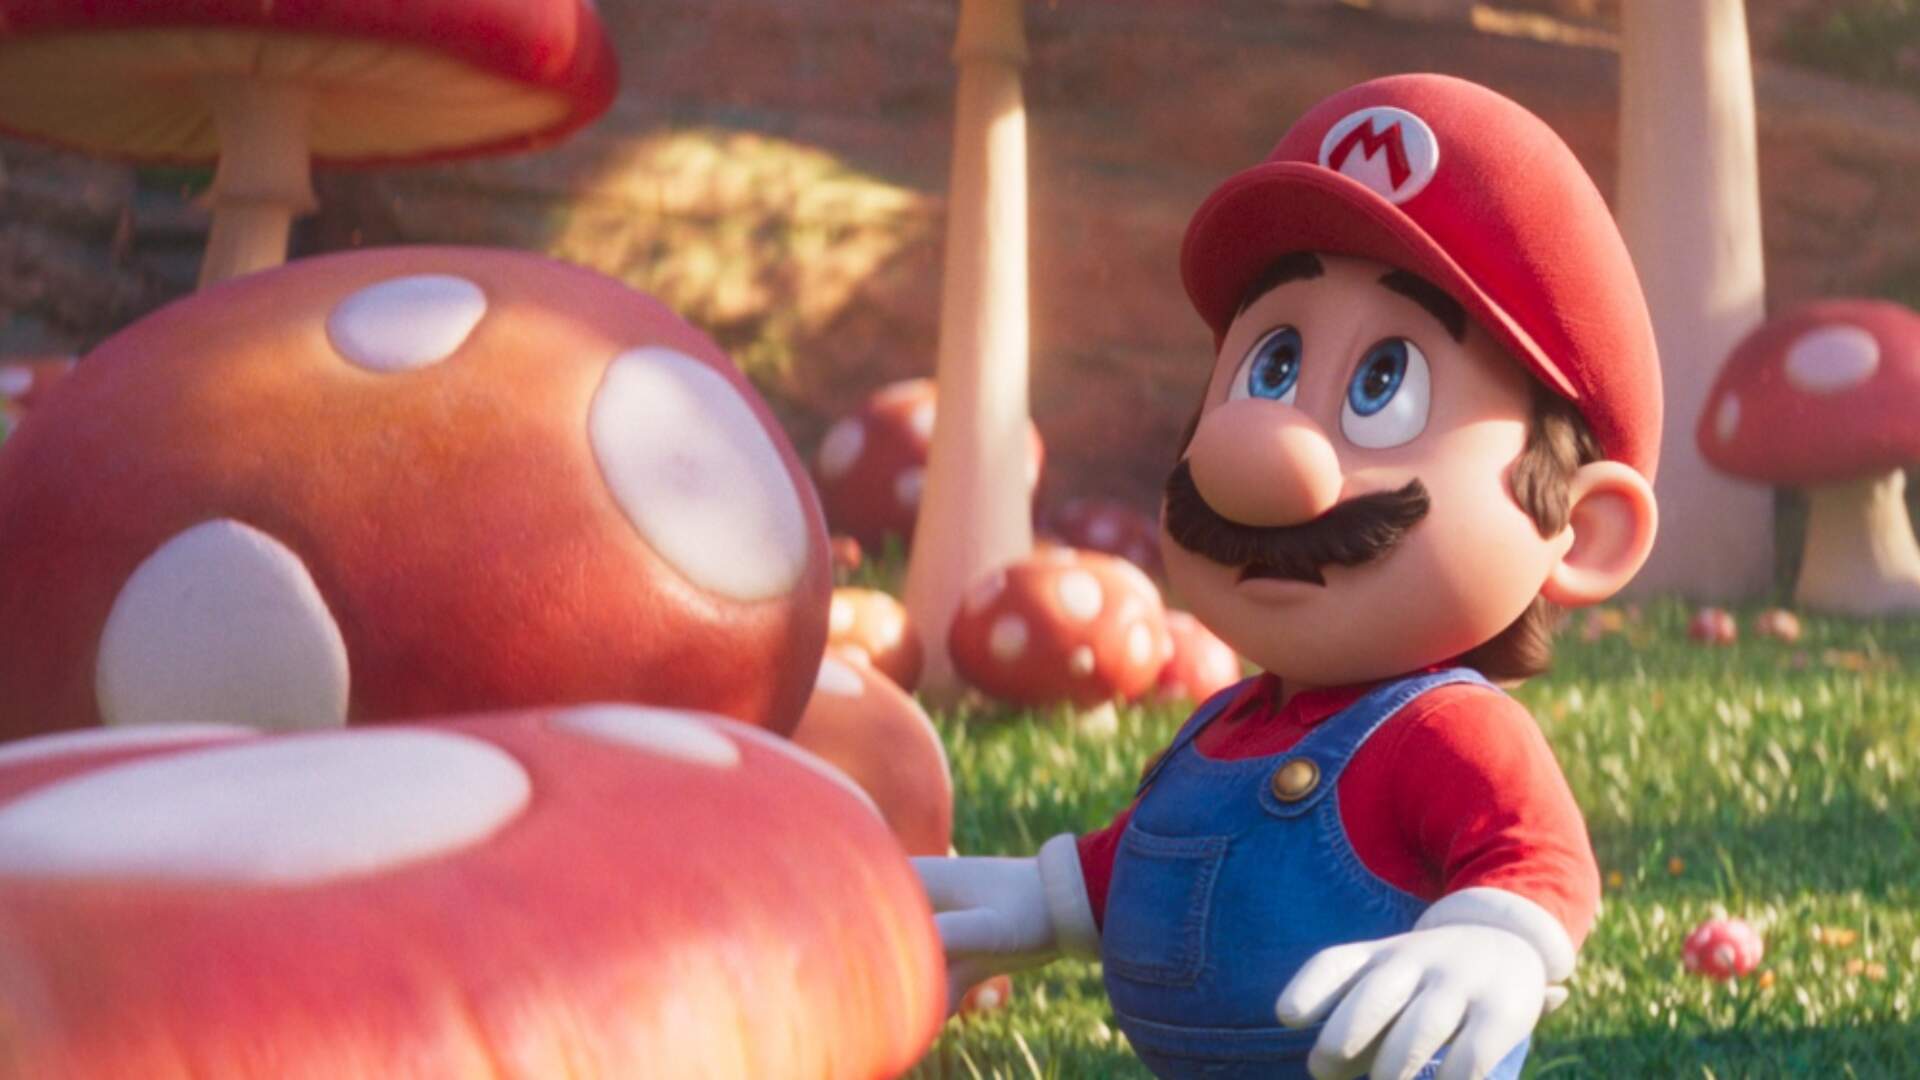 Crítica: Super Mario Bros. O Filme - Coisa de Cinéfilo